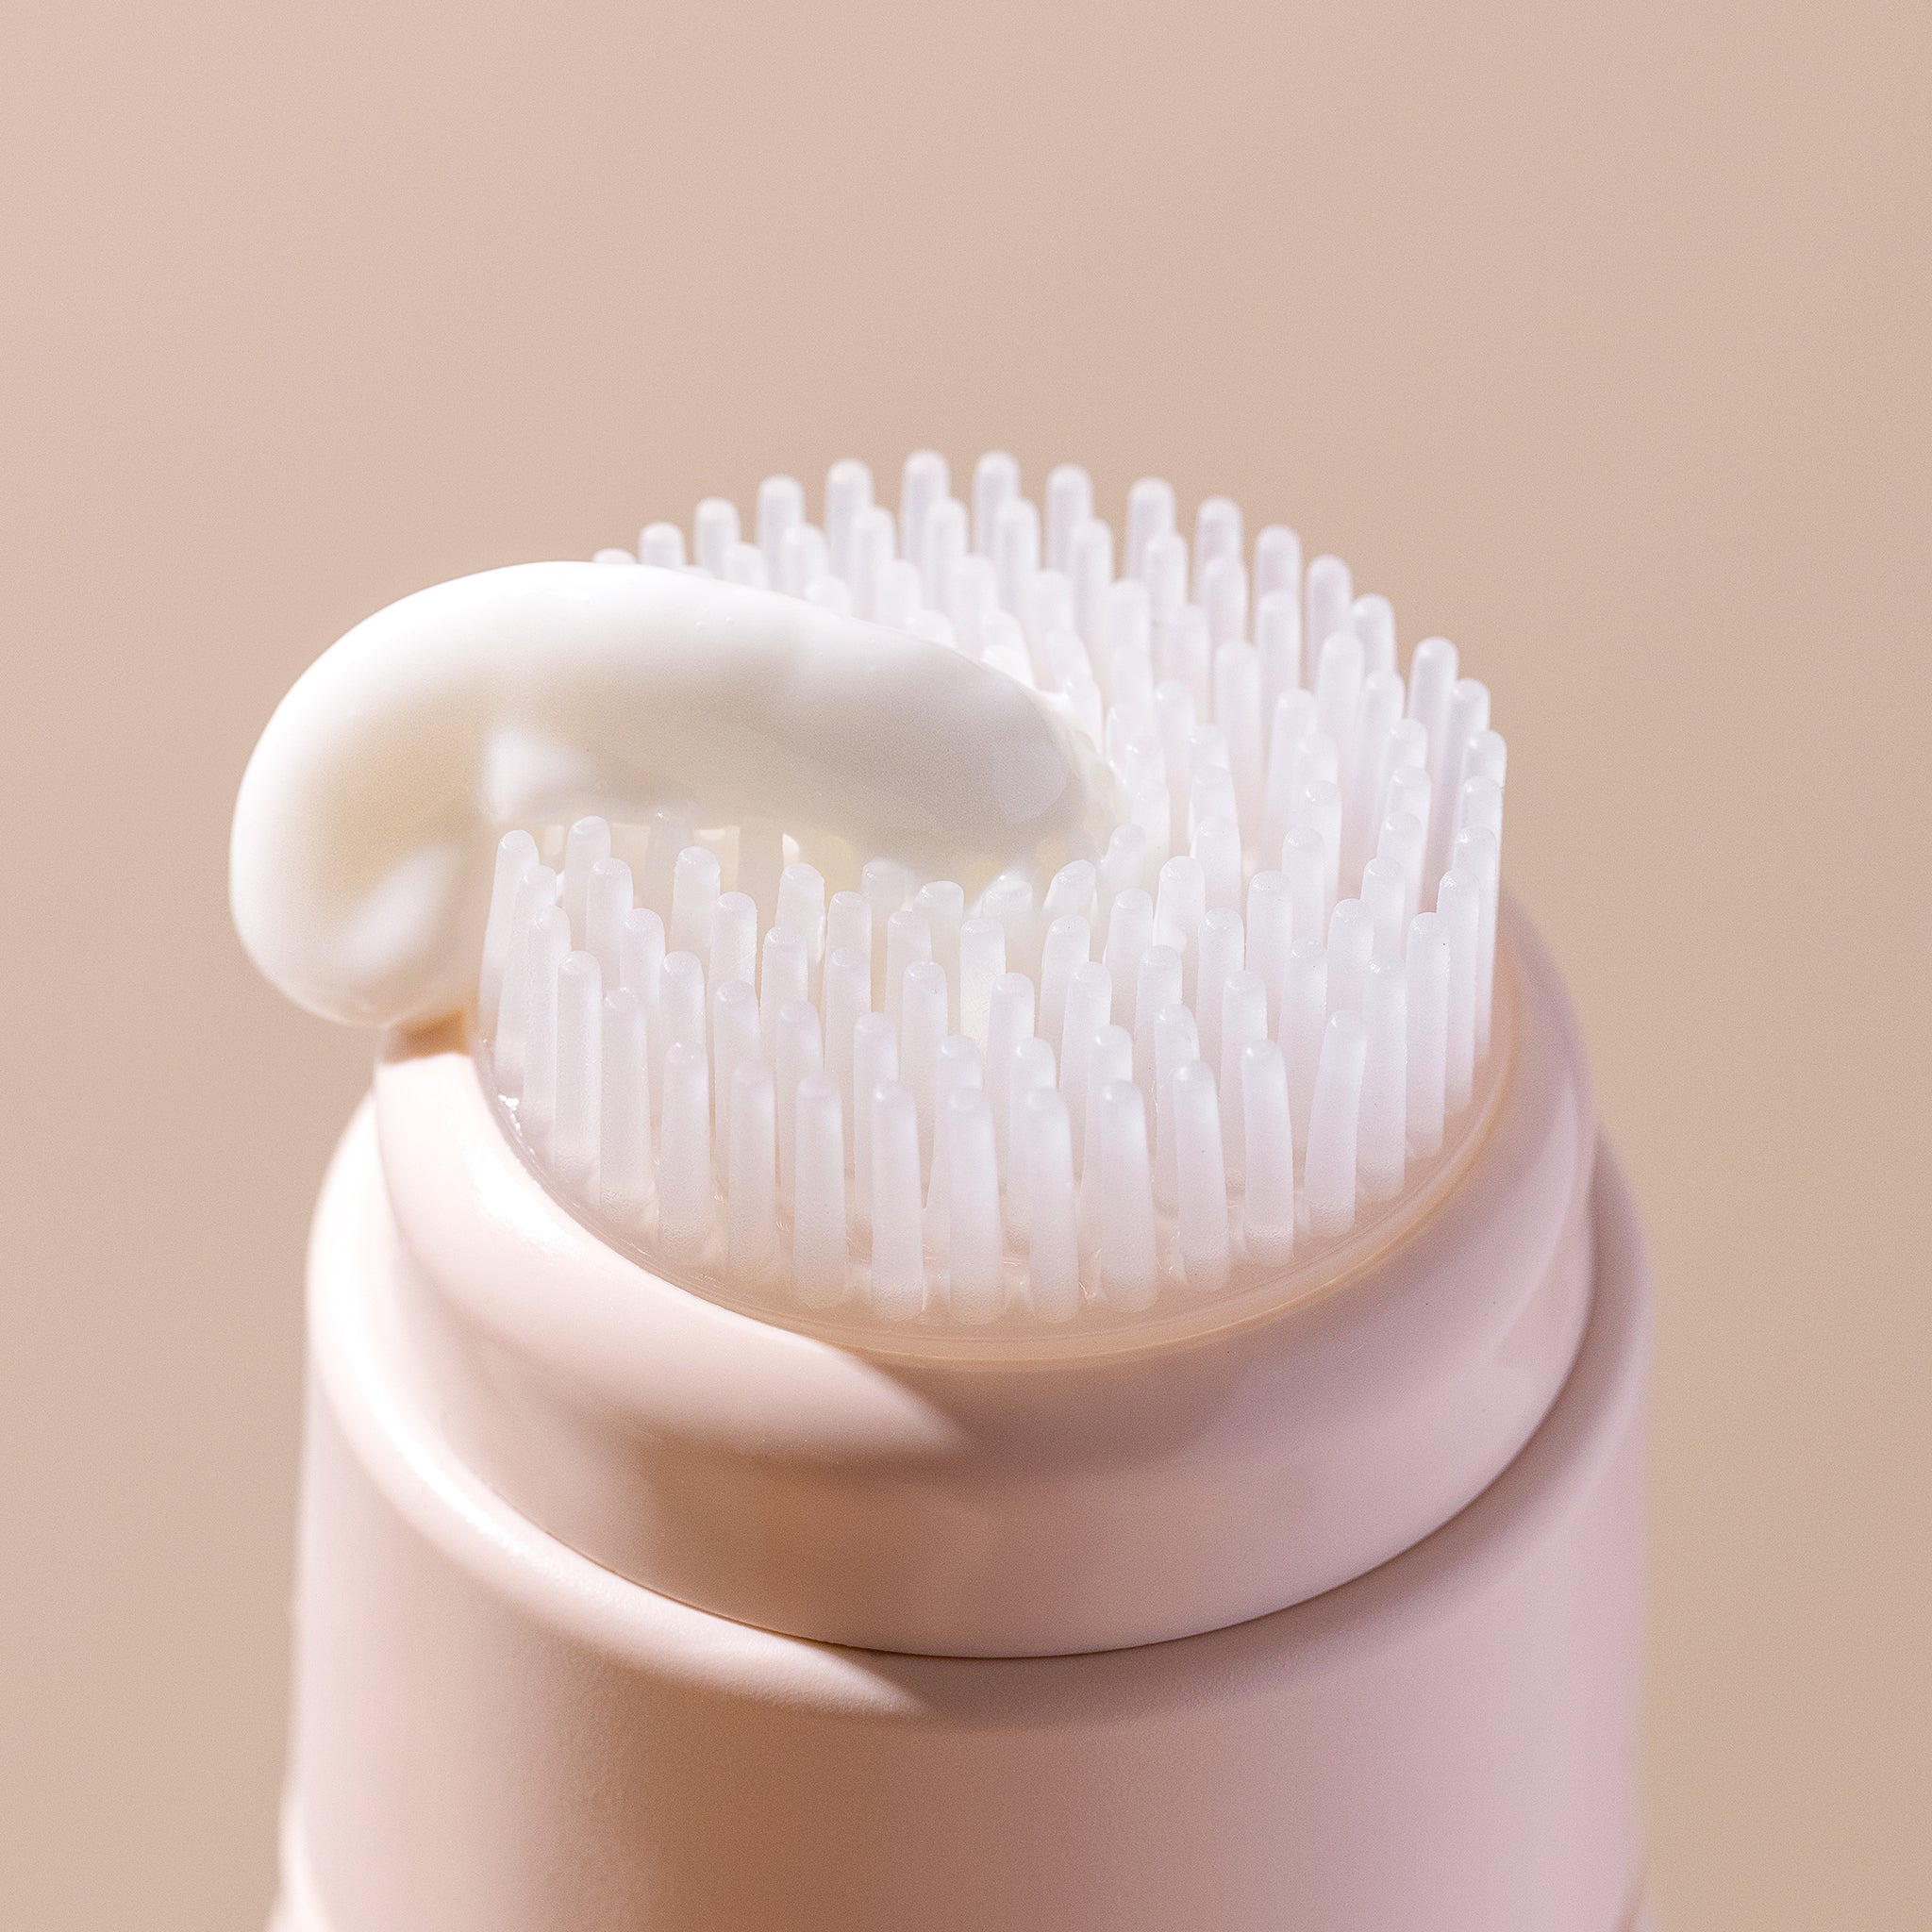 Phytofuse Renew Cream Cleanser - mypure.co.uk